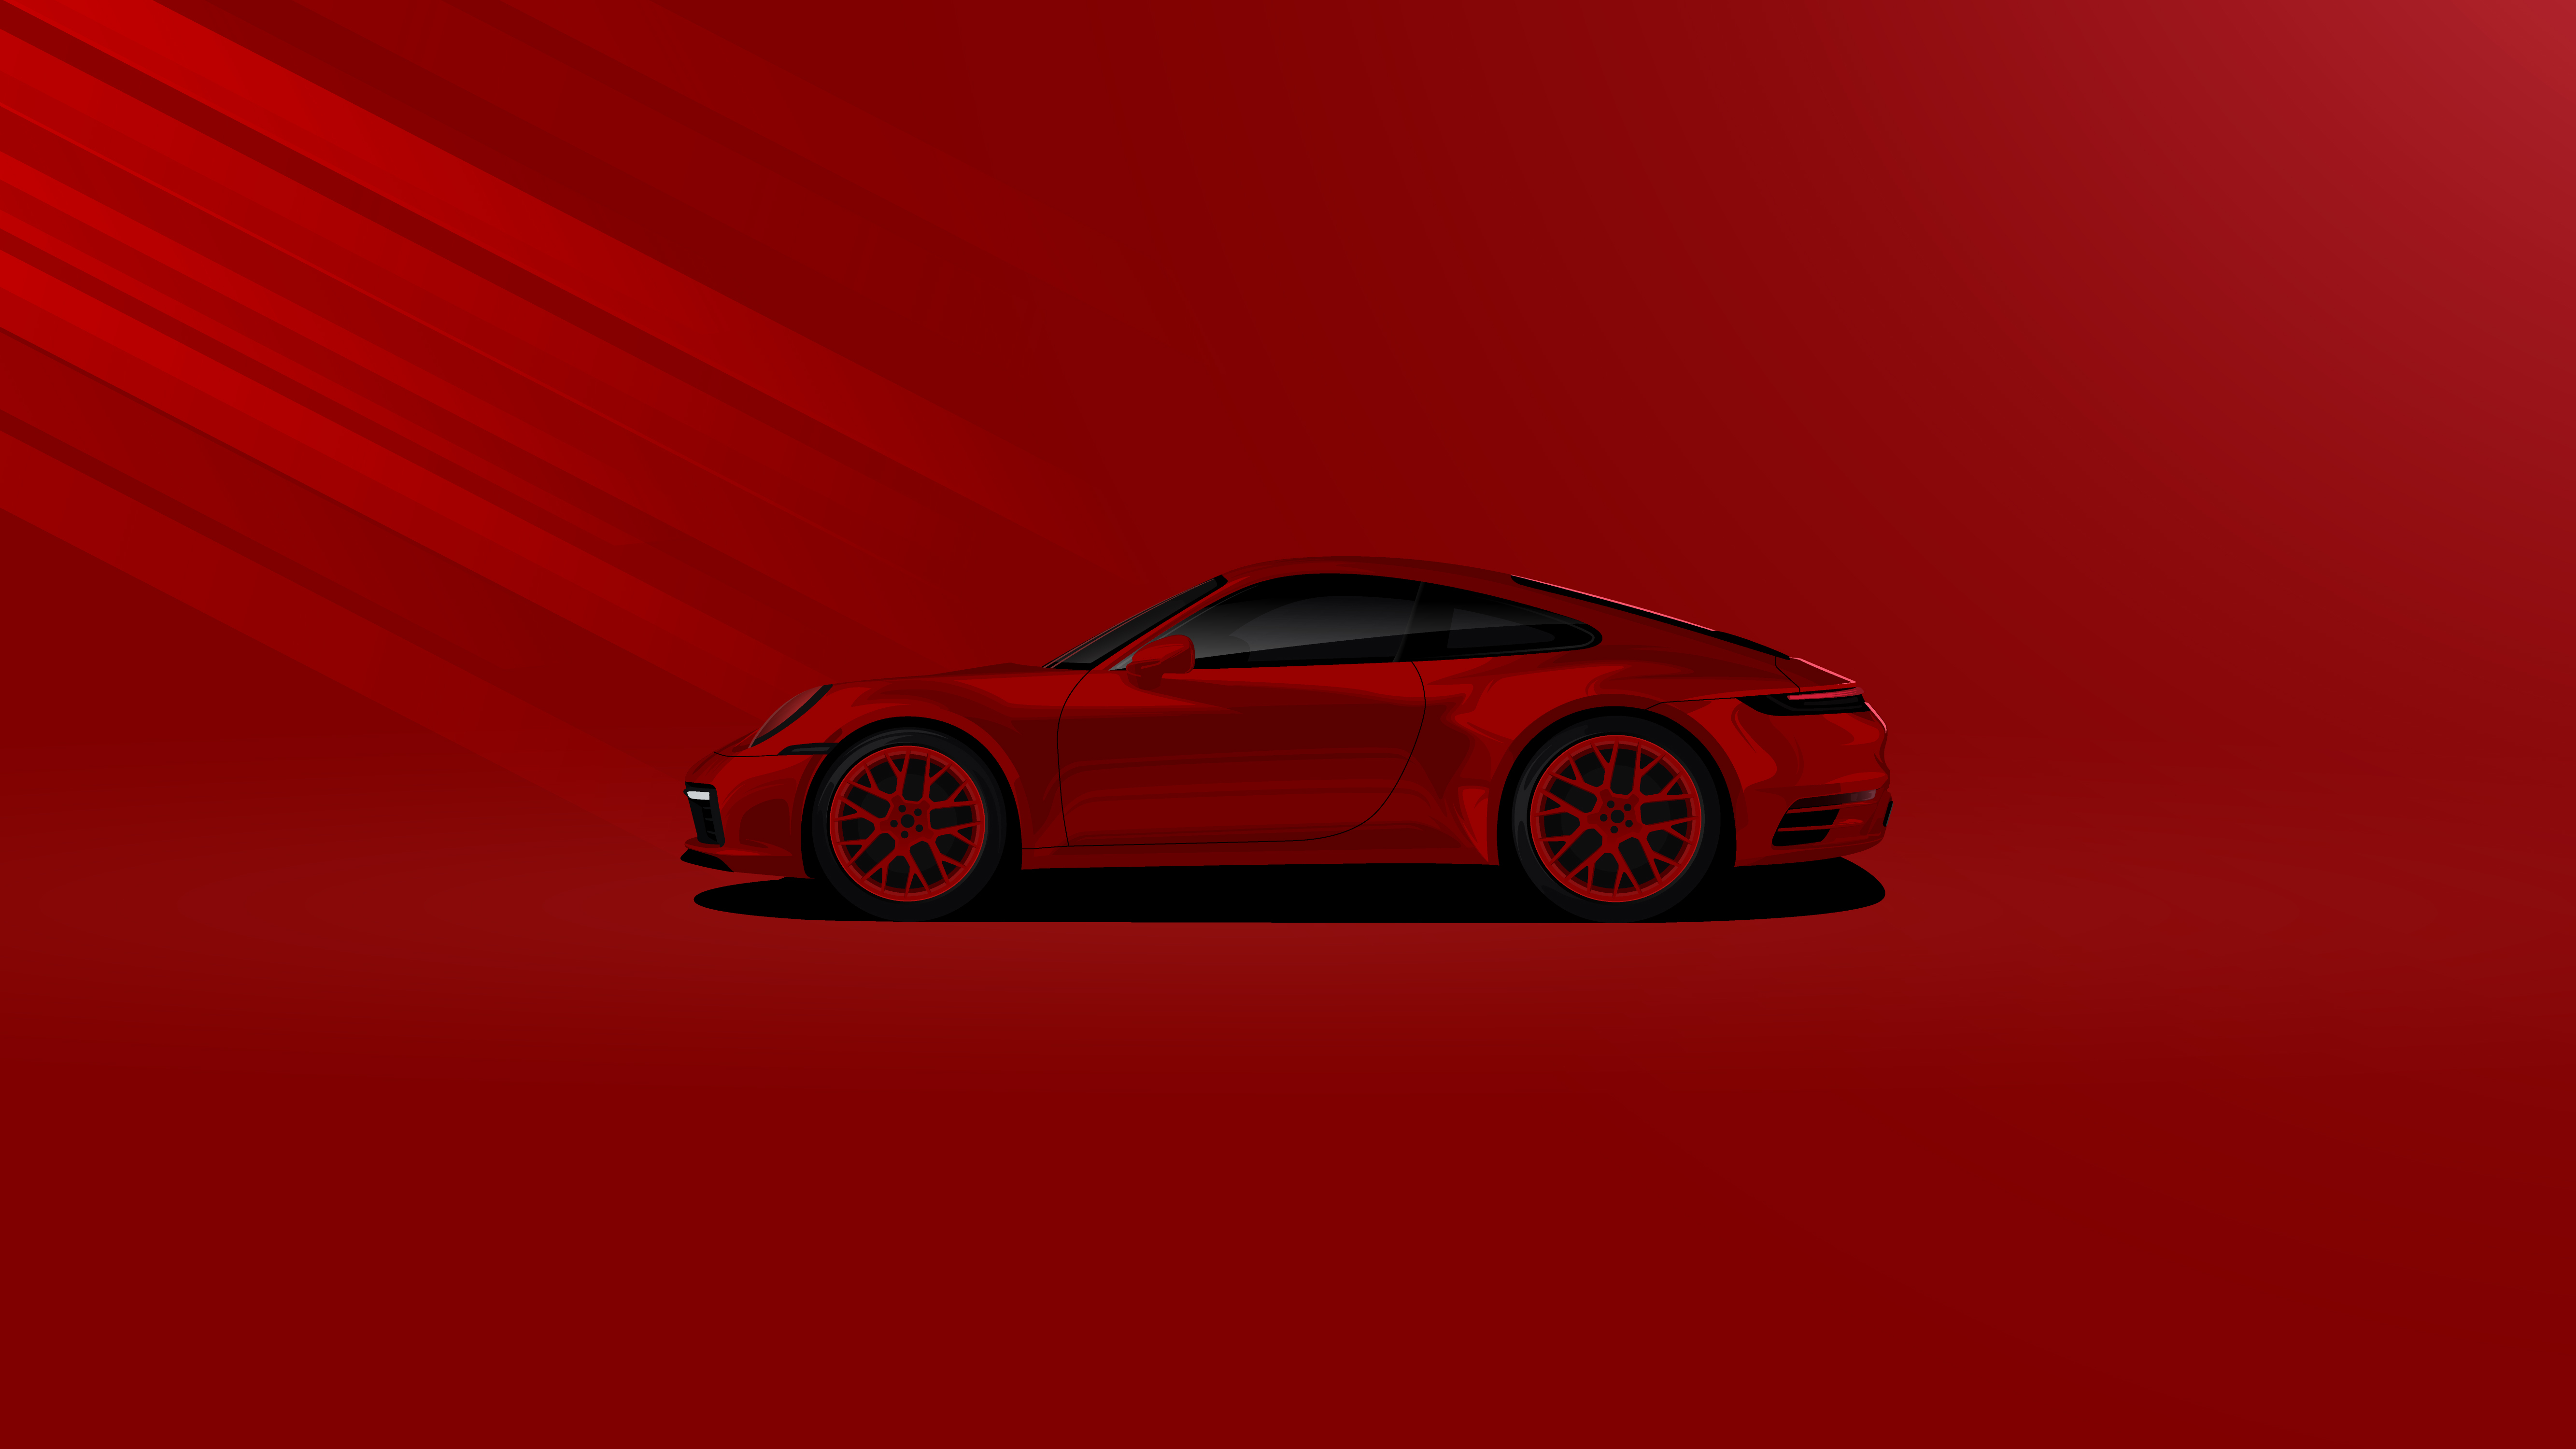 Porsche Minimal Wallpaper, HD Minimalist 4K Wallpapers, Images, Photos and  Background - Wallpapers Den